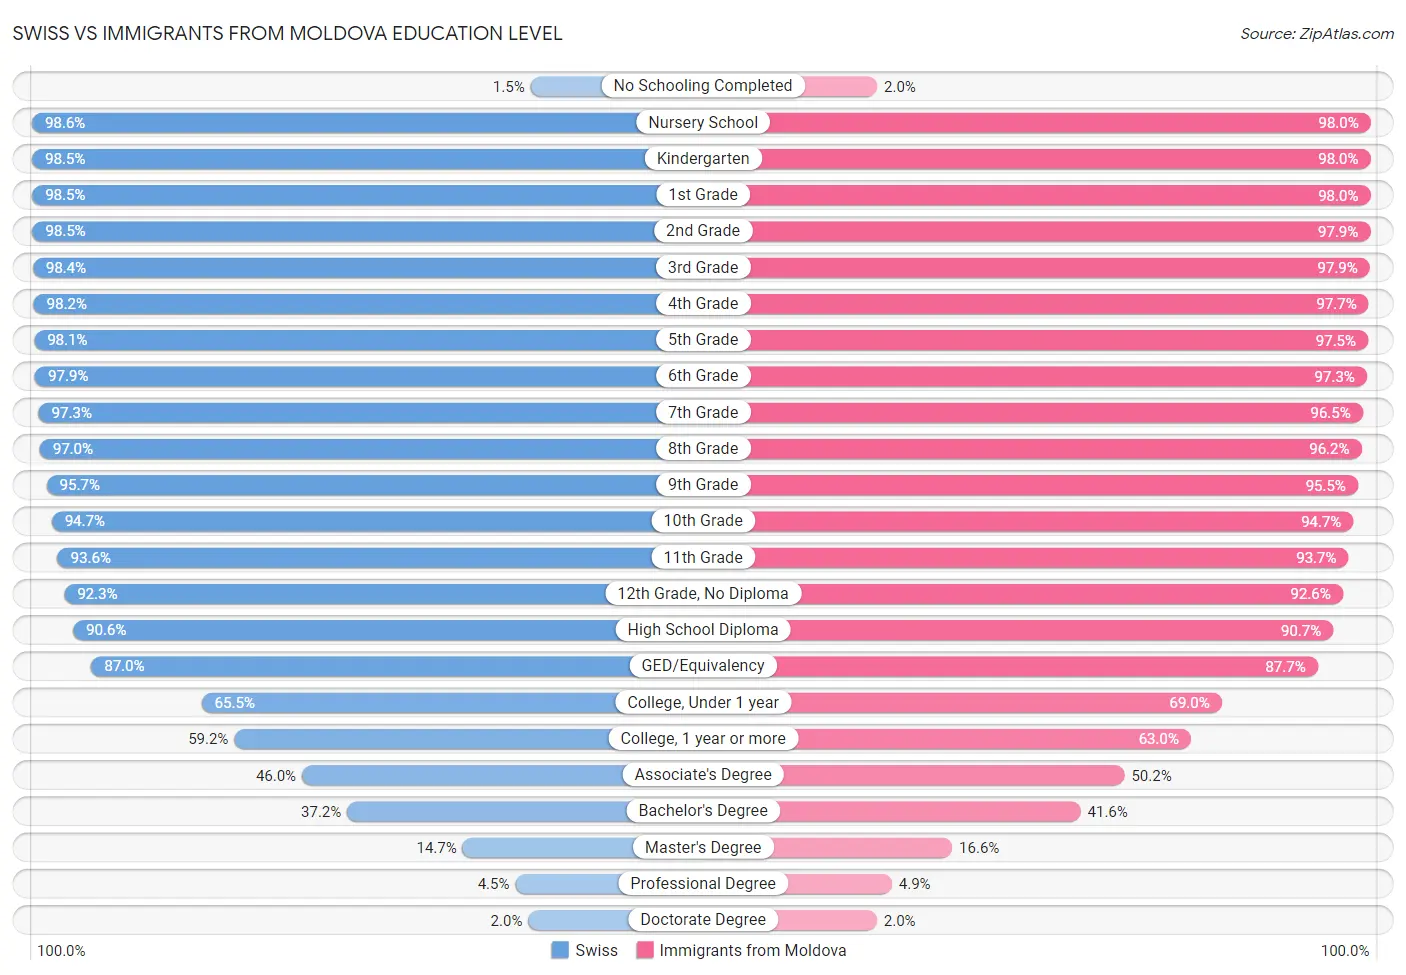 Swiss vs Immigrants from Moldova Education Level